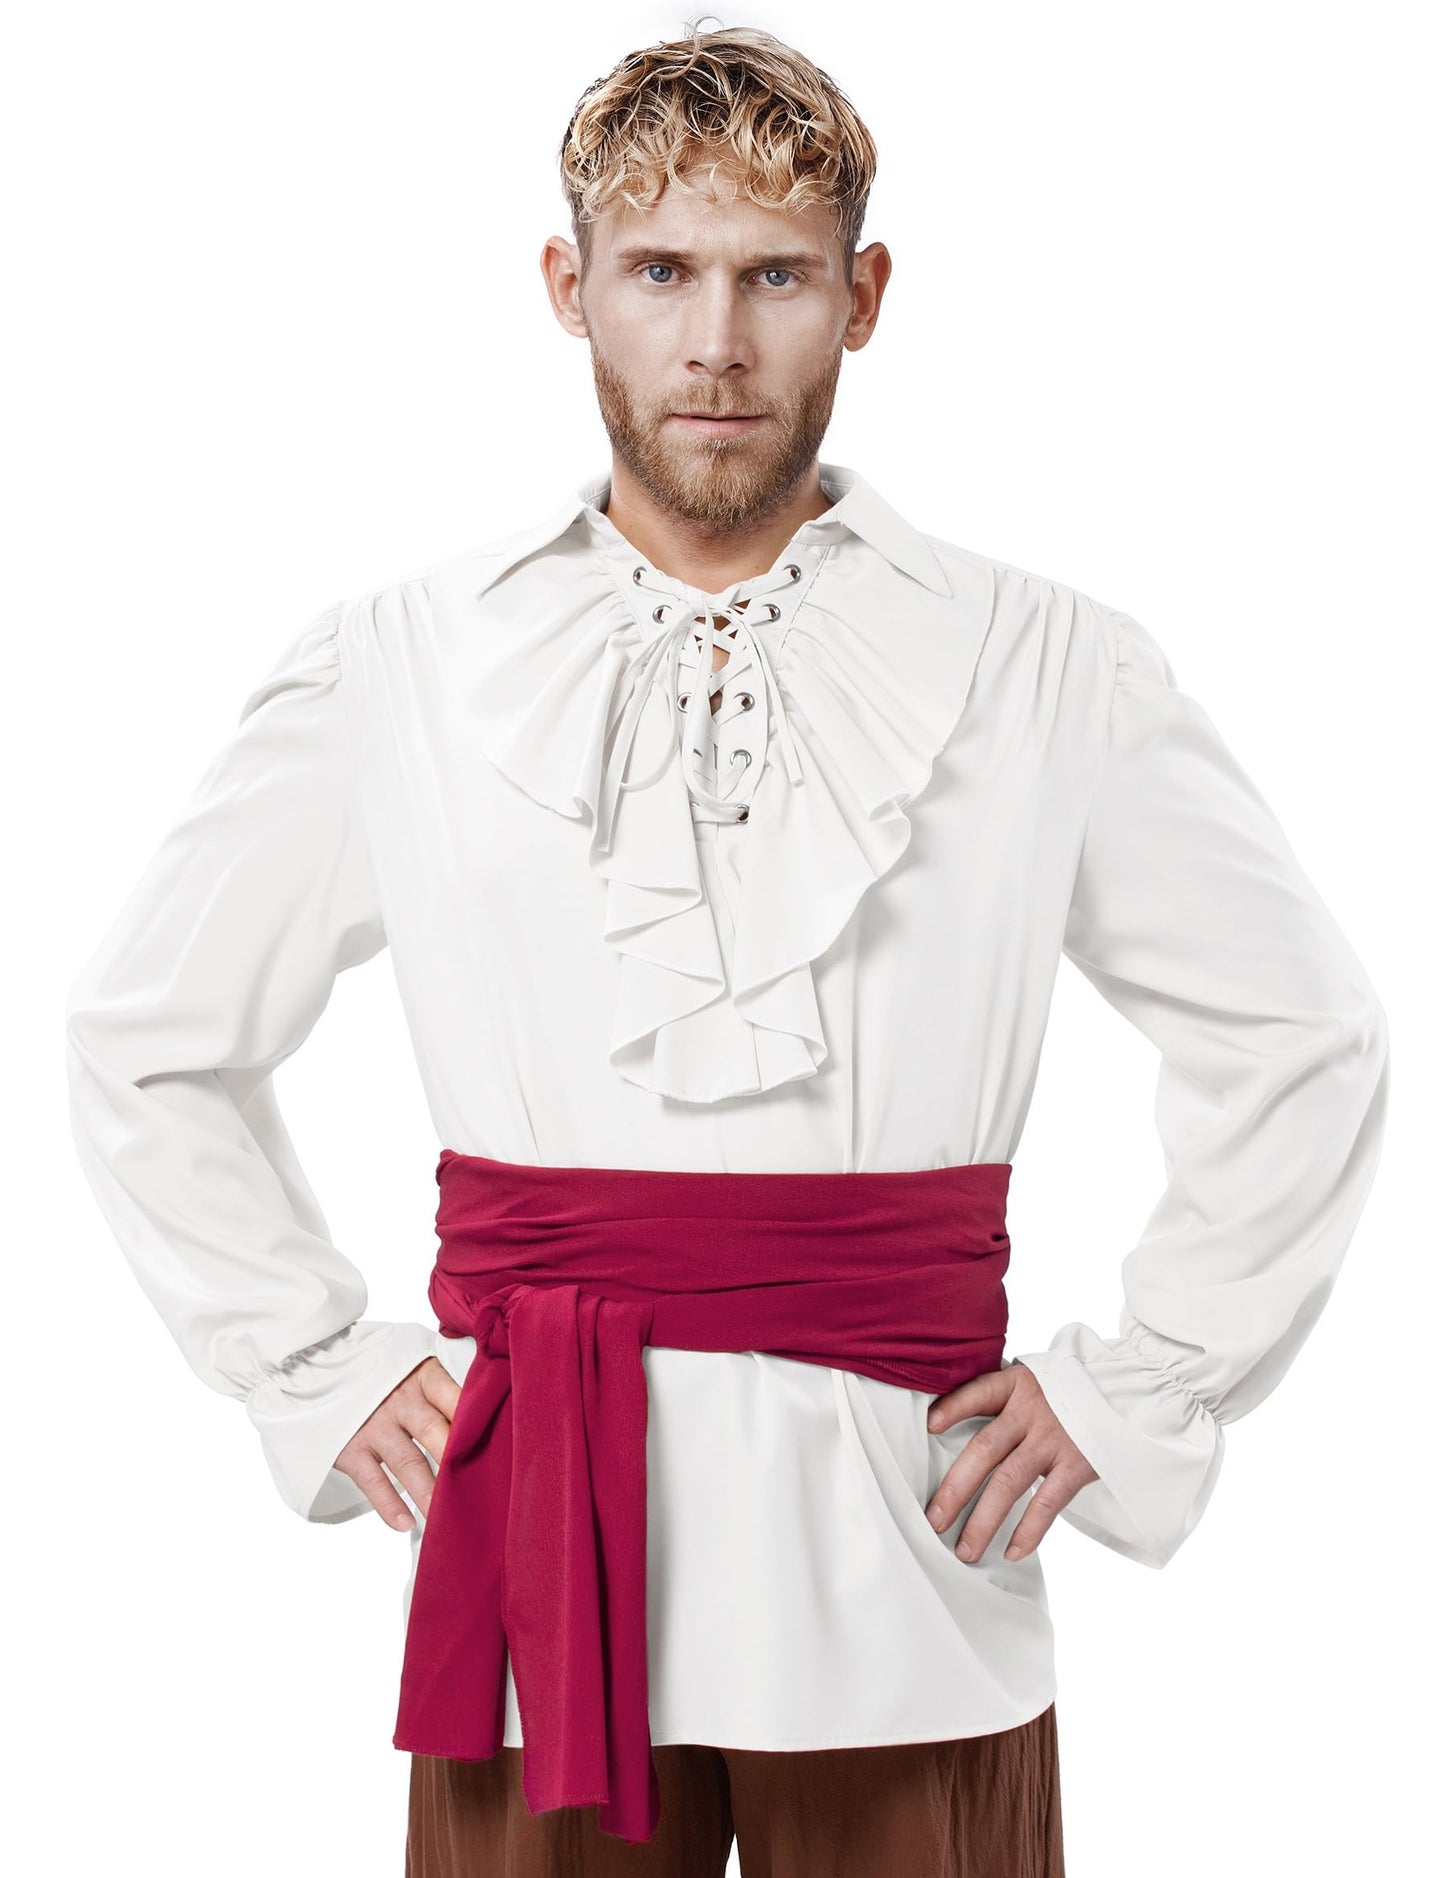 Men's Renaissance Victorian Medieval Pirate Shirt Lace Up Costume Top